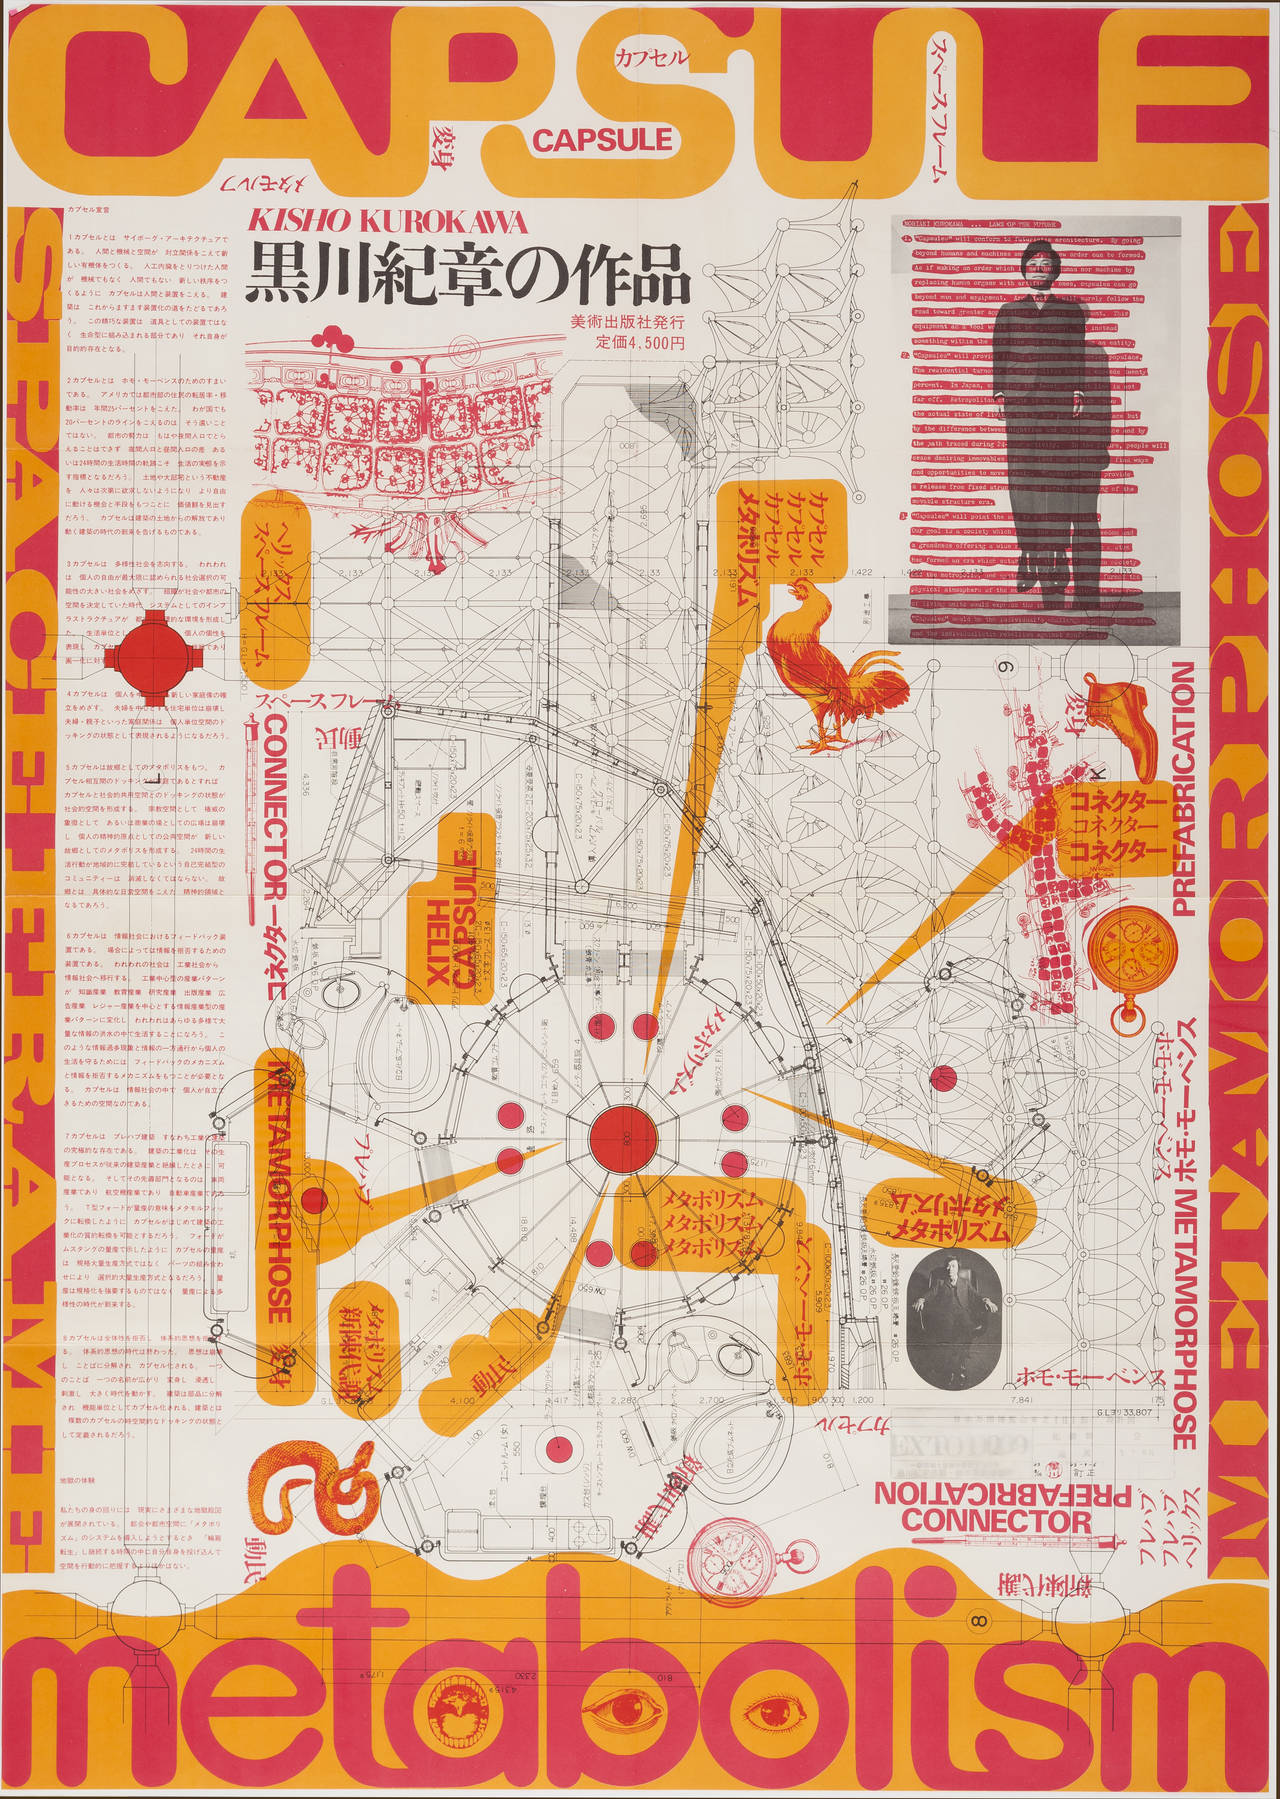 Awazu Kiyoshi. Poster for the work of Kisho Kurokawa, 1970 (Kisho Kurokawa Architect and Associates)